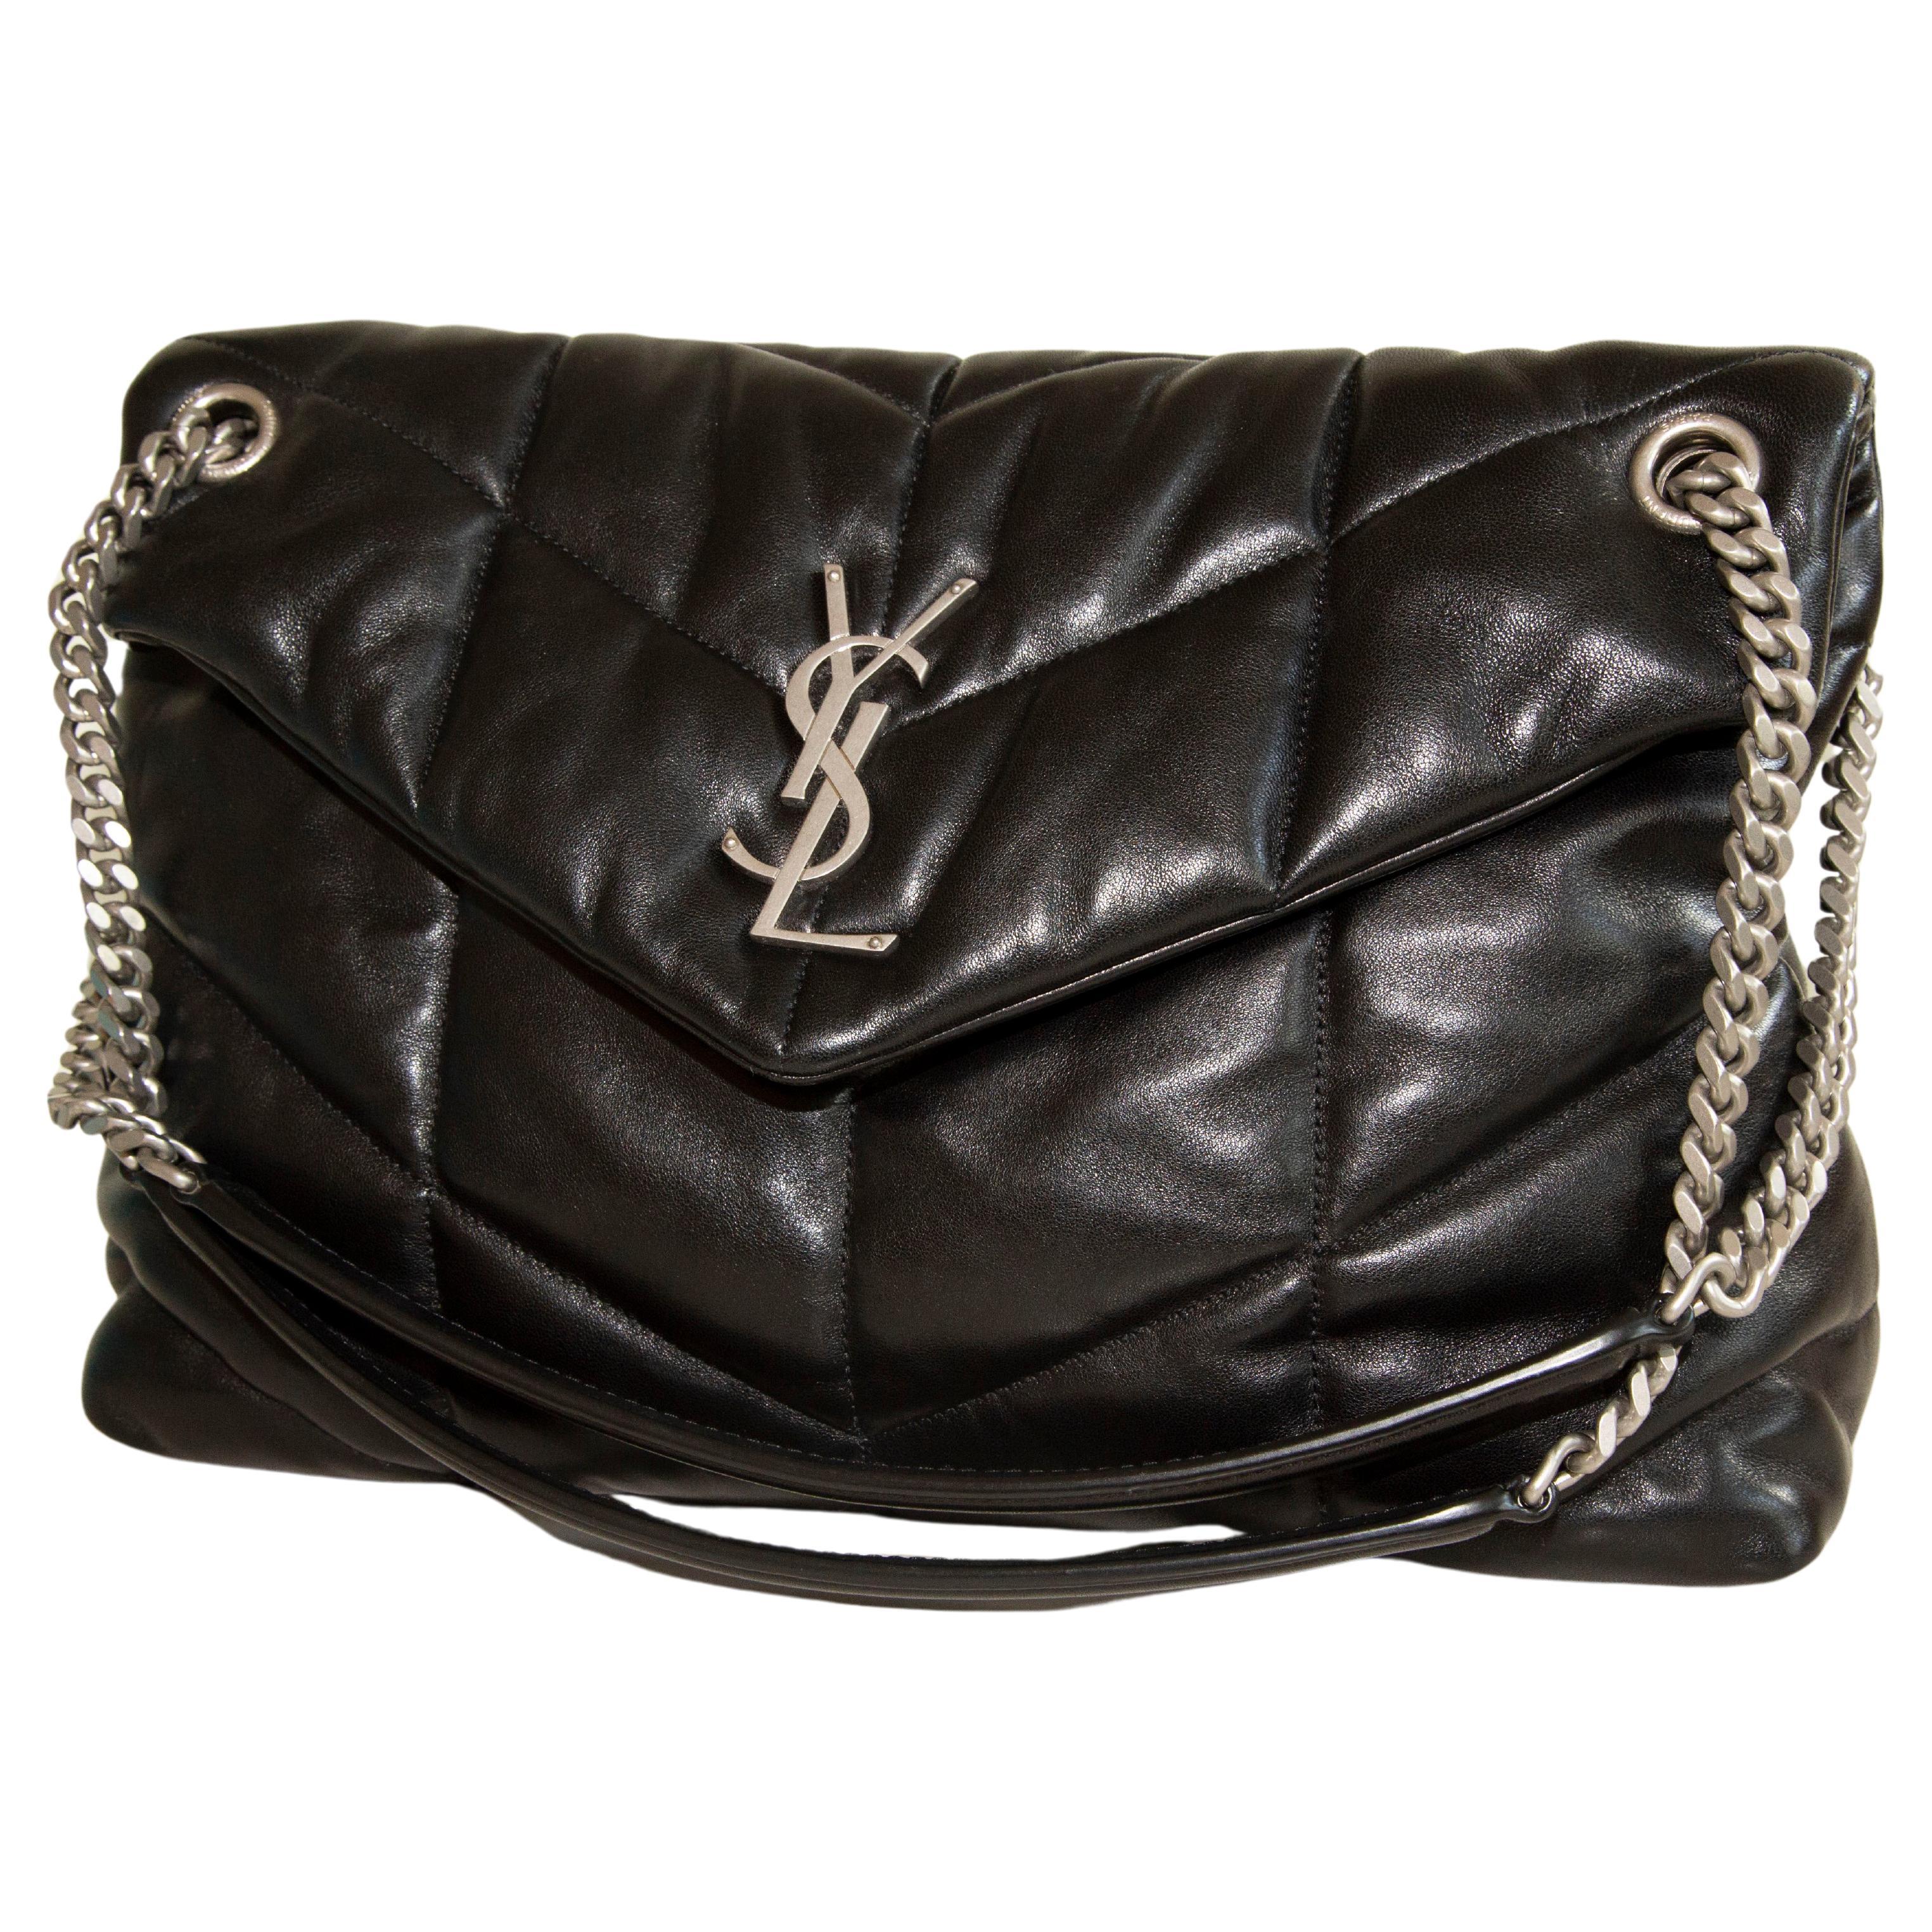 Saint Laurent Puffer Medium Shoulder Bag in Black Leather 